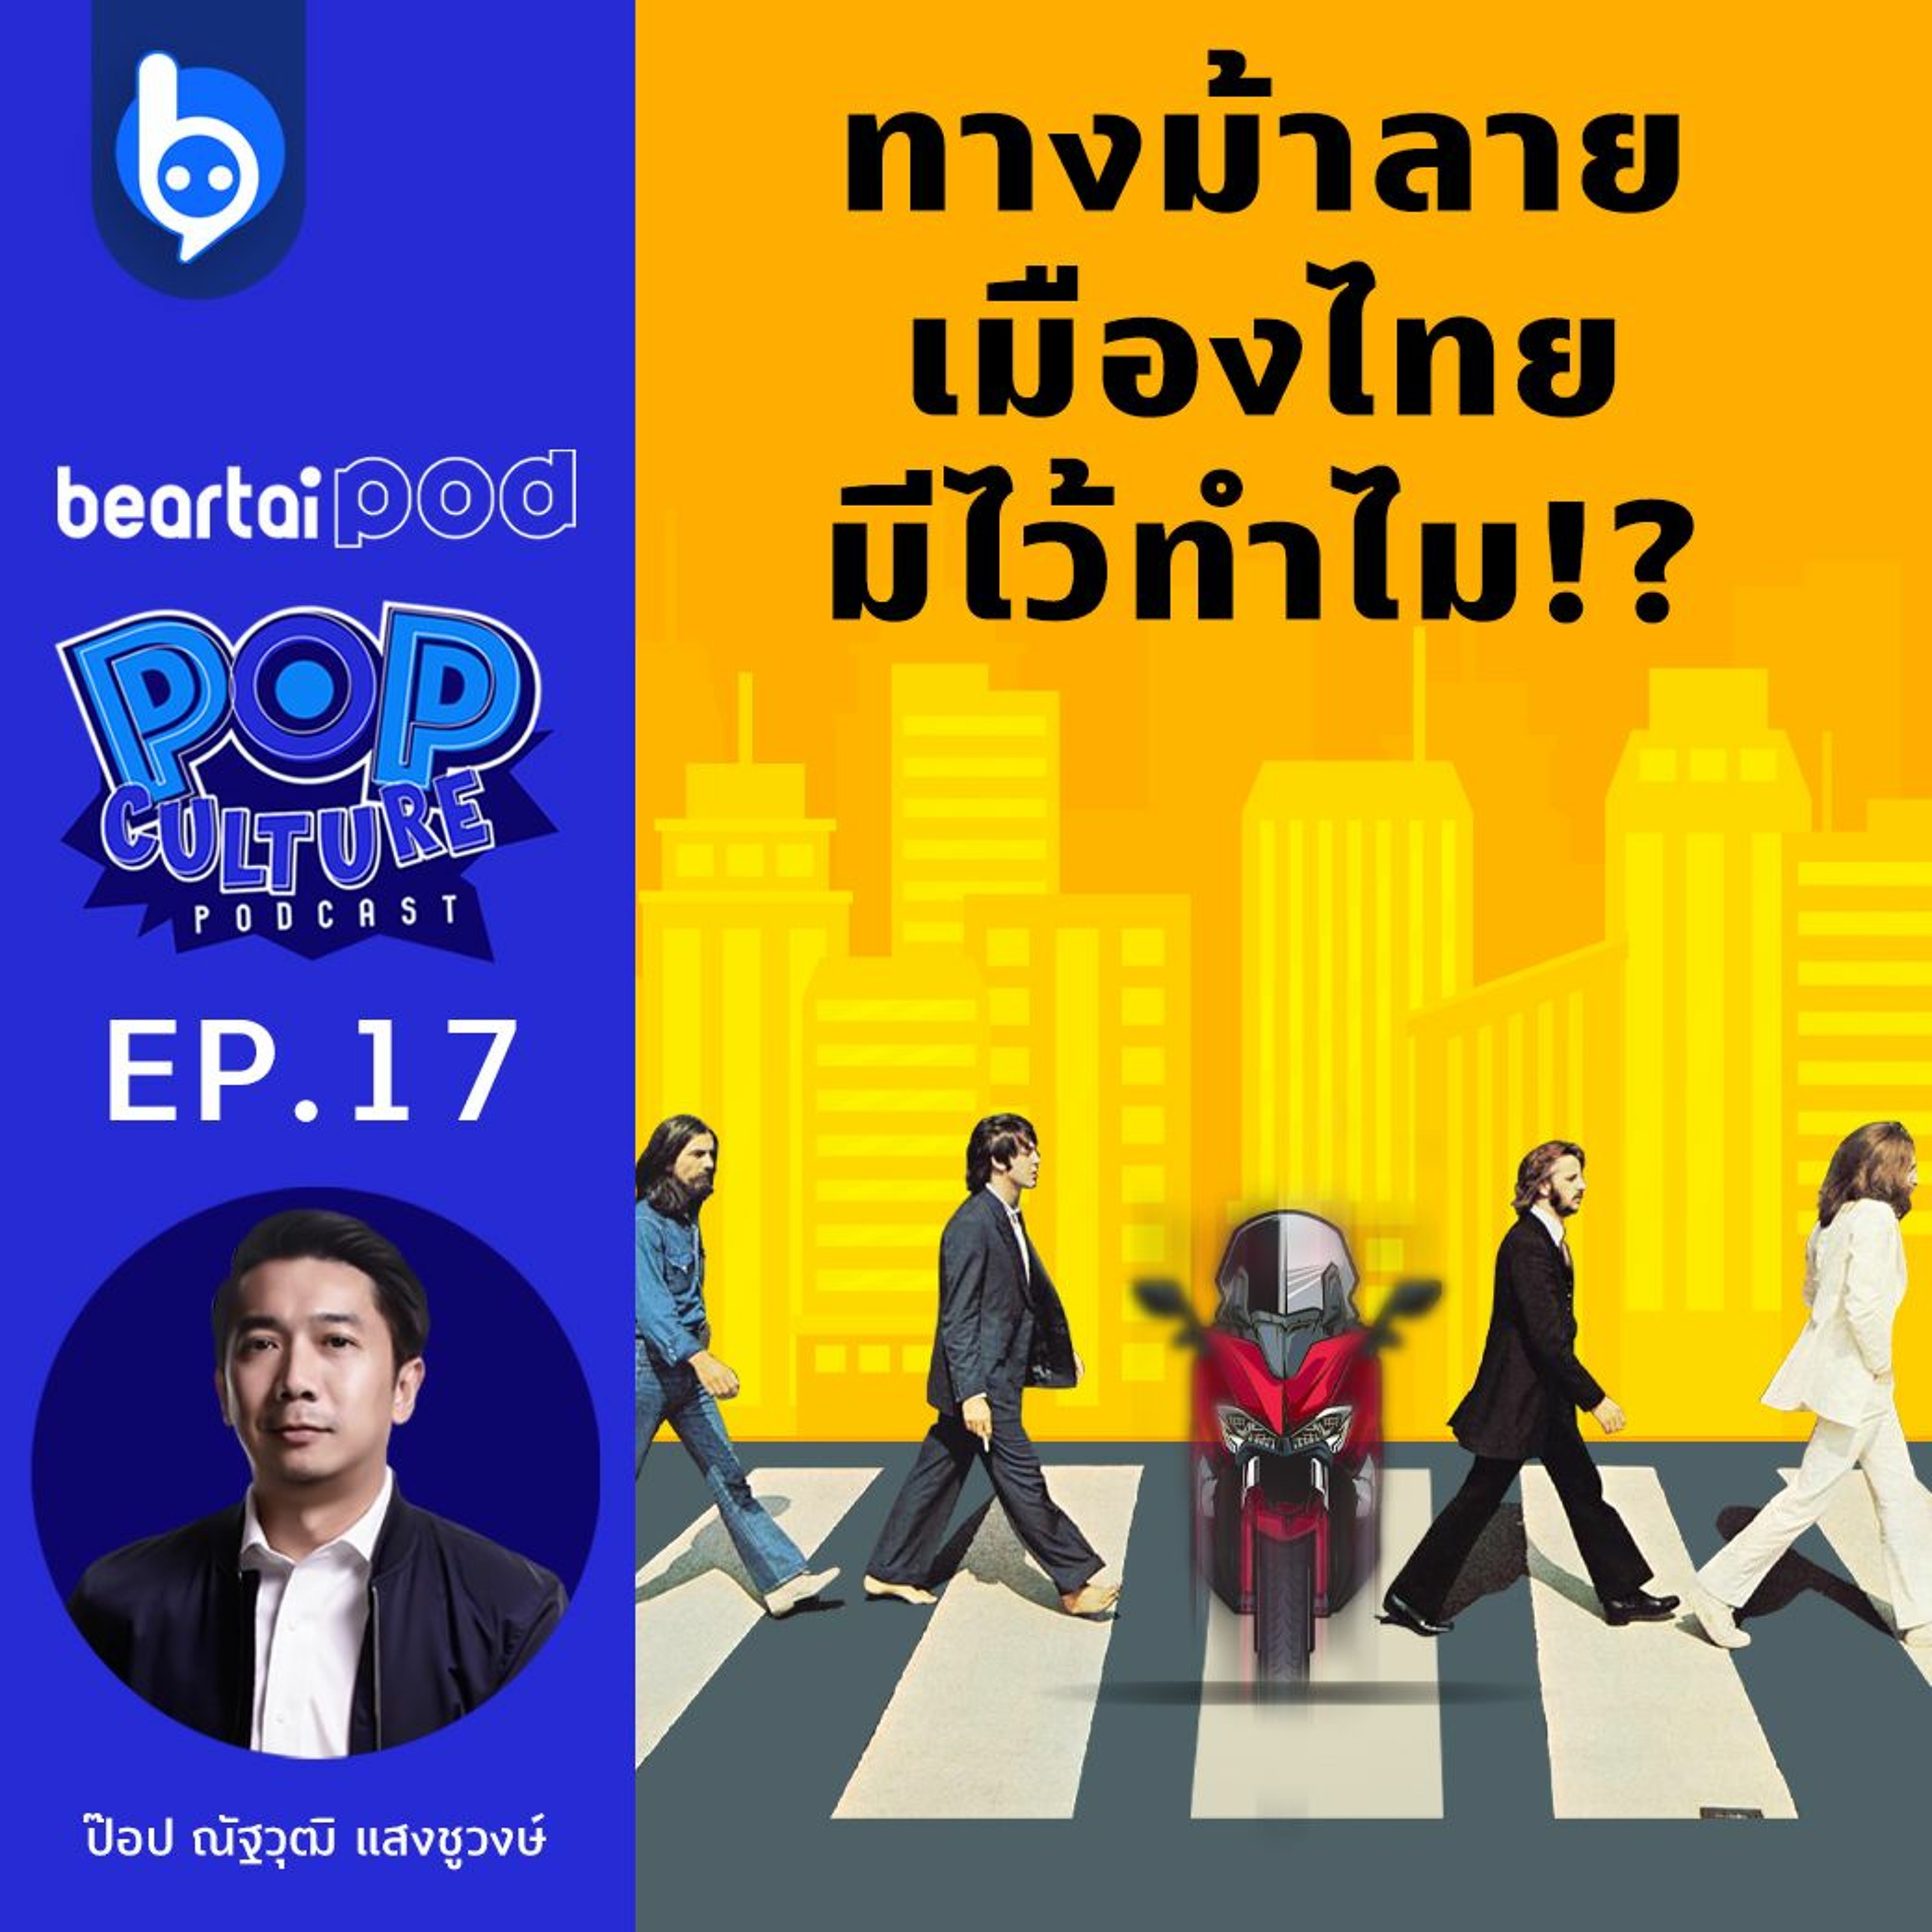 Pop Culture Podcast EP17 : อนาถใจ… “ทางม้าลายเมืองไทย” มีไว้ทำไม?